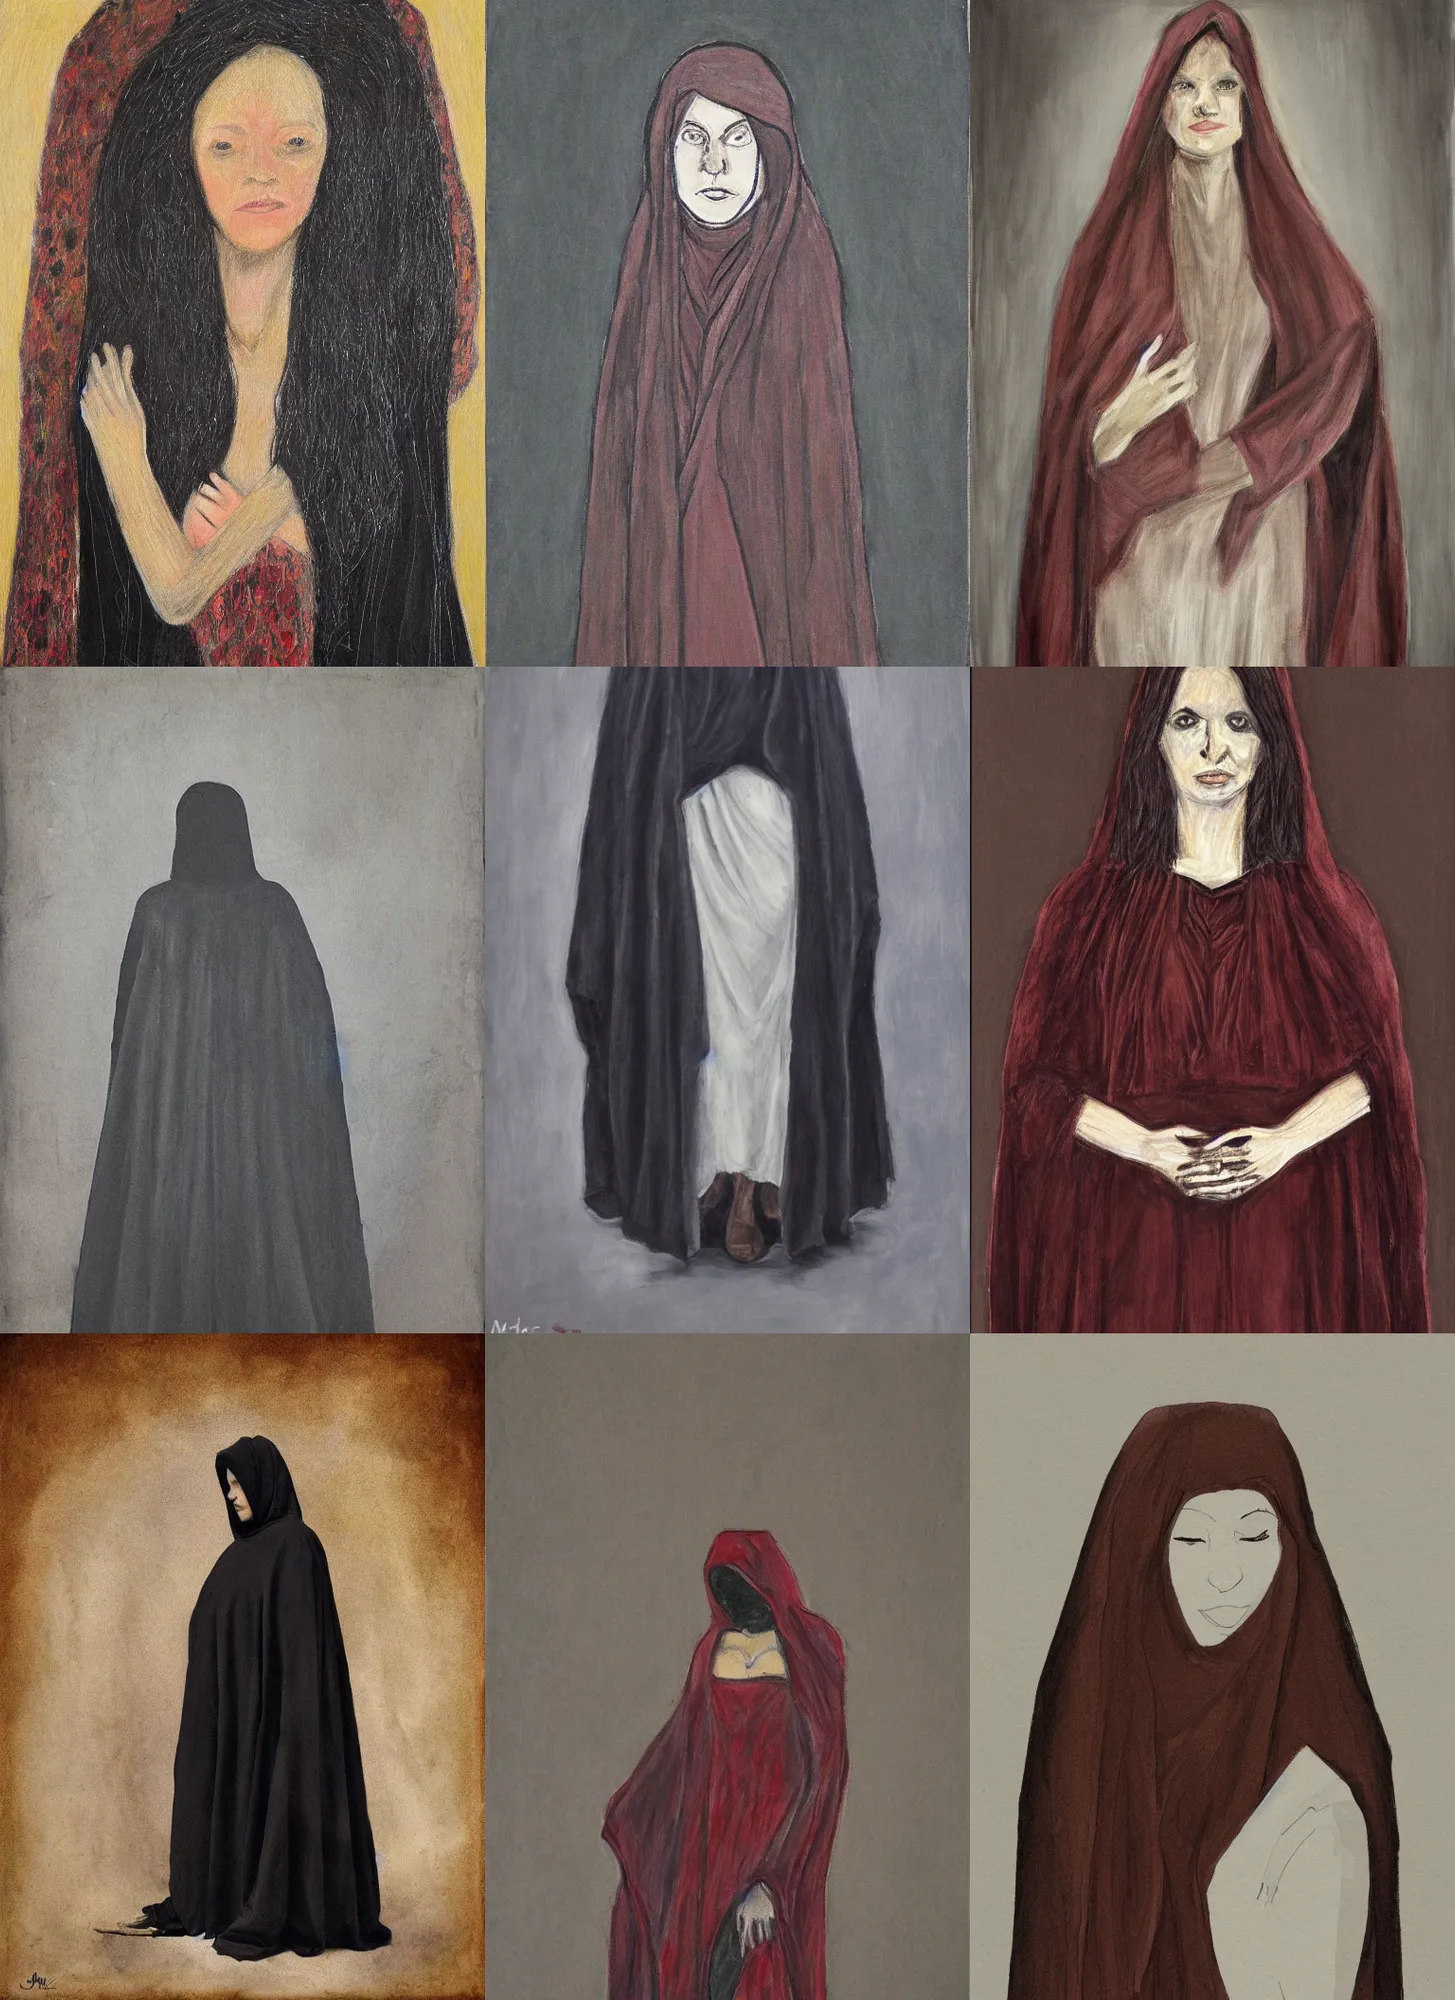 Prompt: full body portrait of woman with cloak by melanie delon, dark